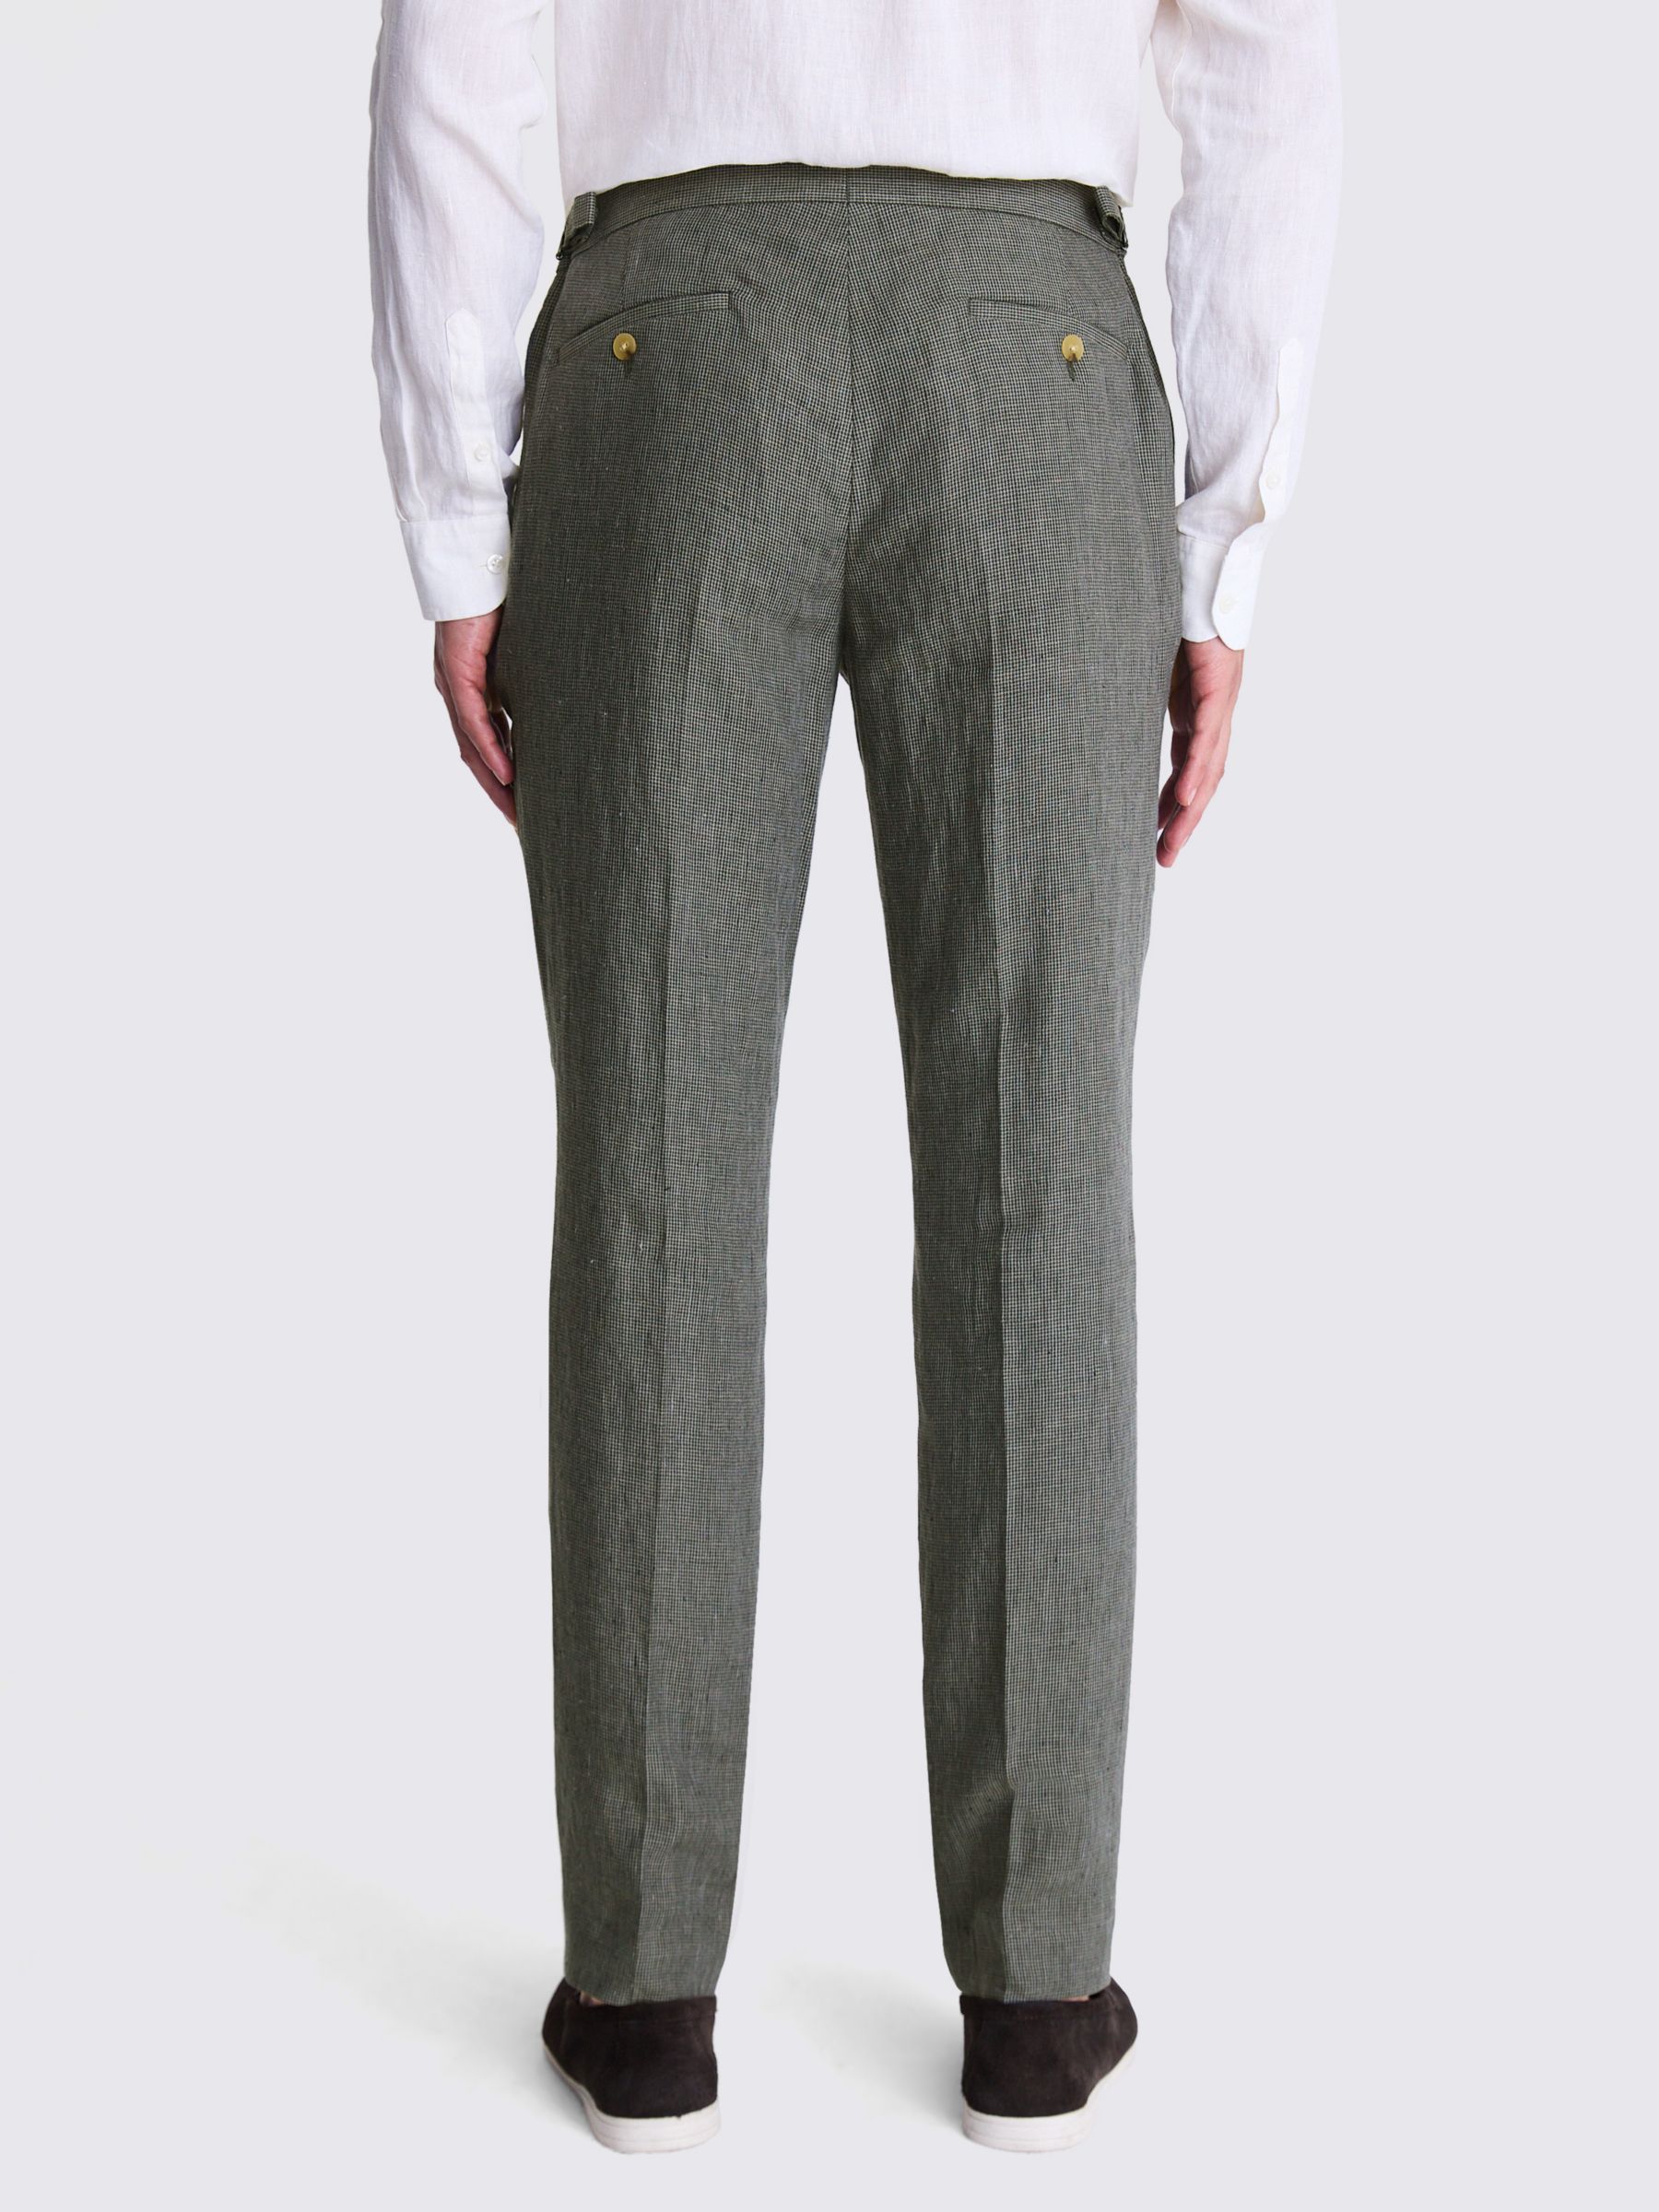 Moss Slim Fit Puppytooth Linen Trousers, Green, 30R